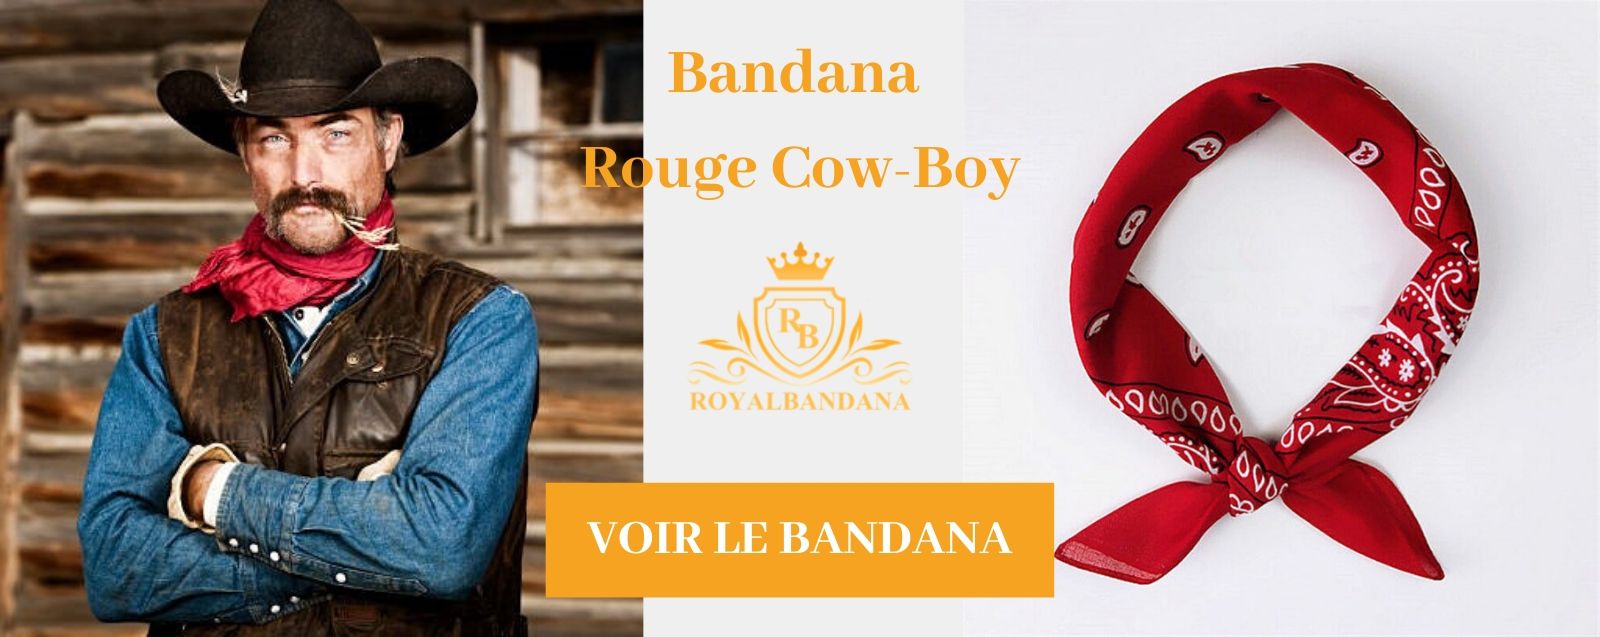 voir bandana rouge cow-boy royalbandana